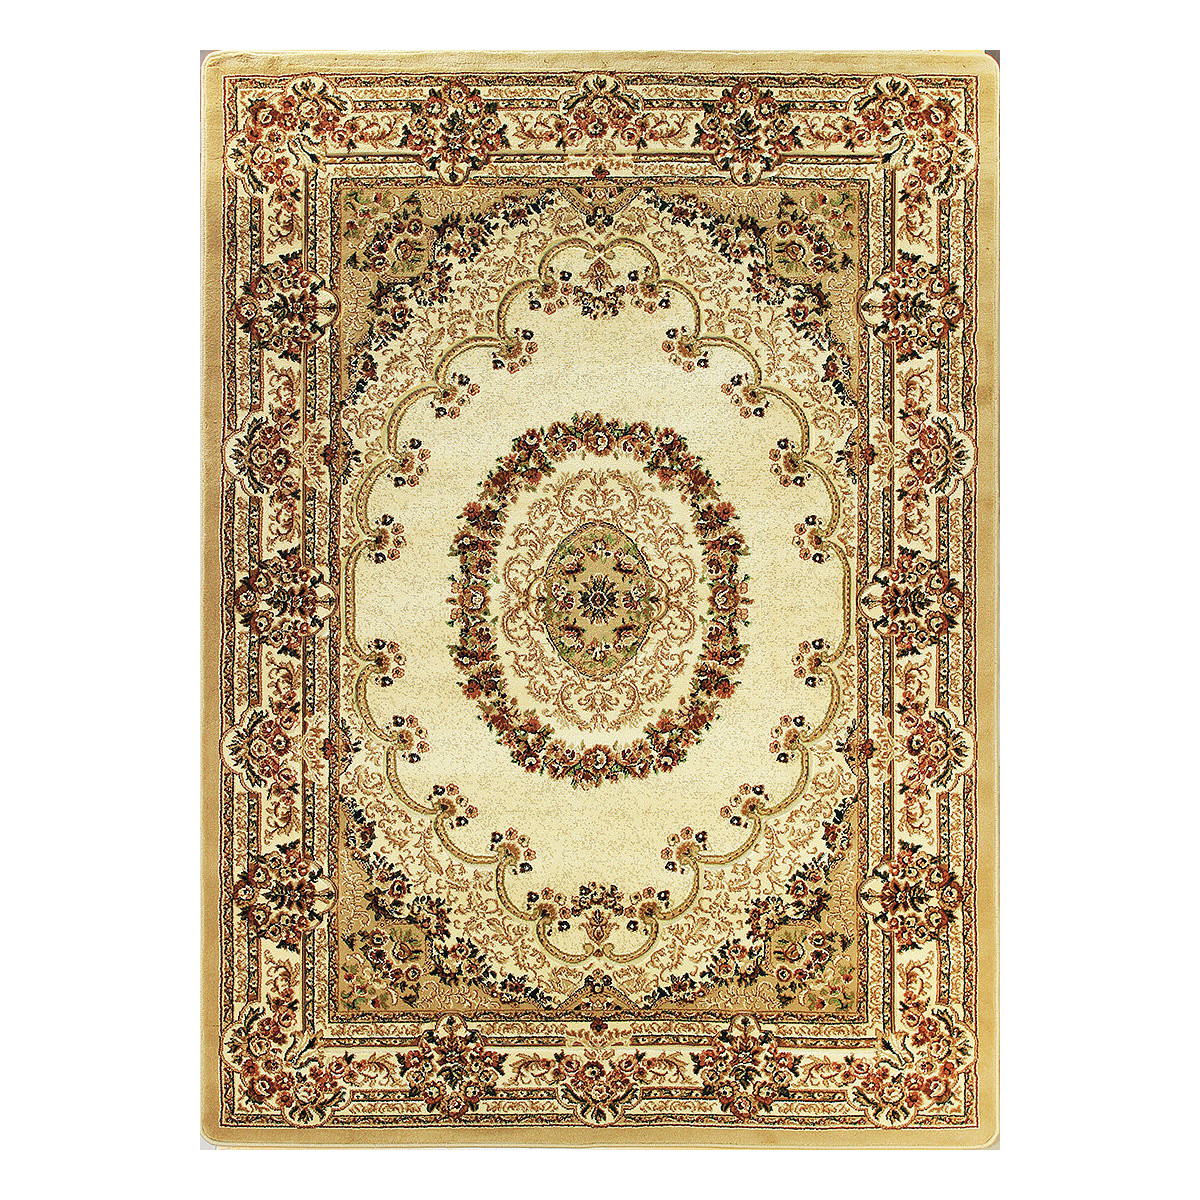 AKCE: 80x150 cm Kusový koberec Adora 5547 K (Cream)